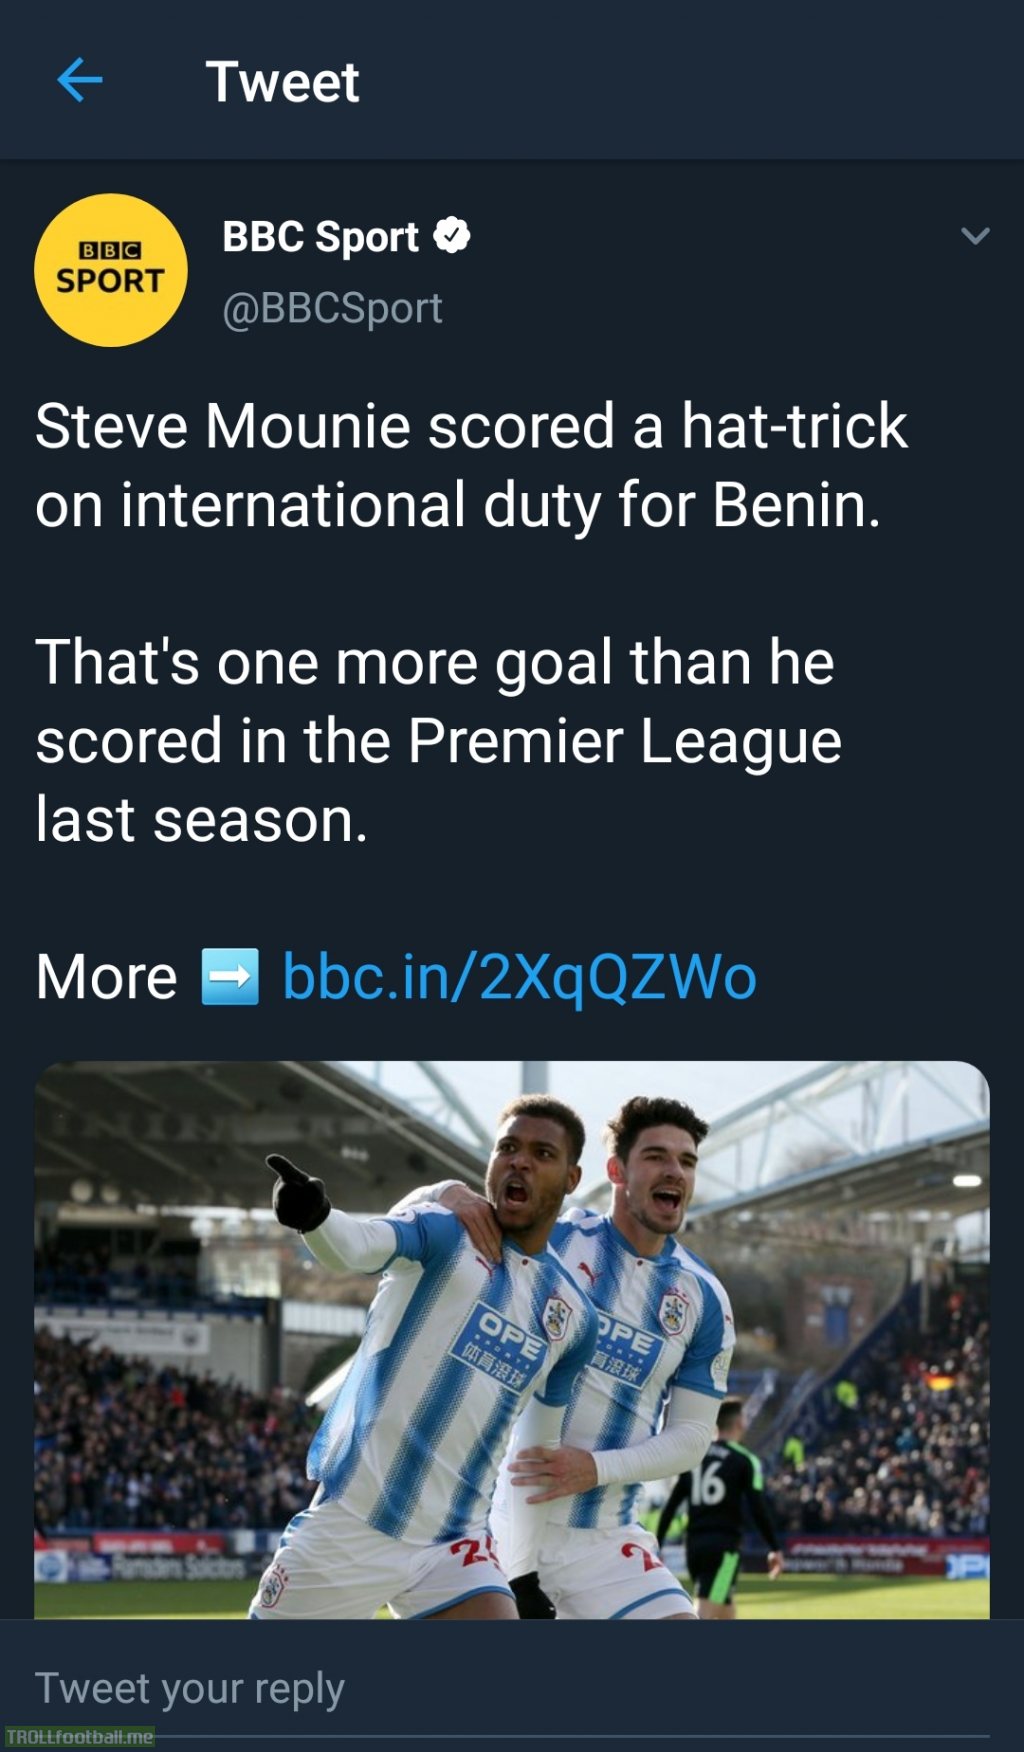 Steve Mounie scored a hat-trick on international duty for Benin. That's one more goal than he scored in the Premier League last season.